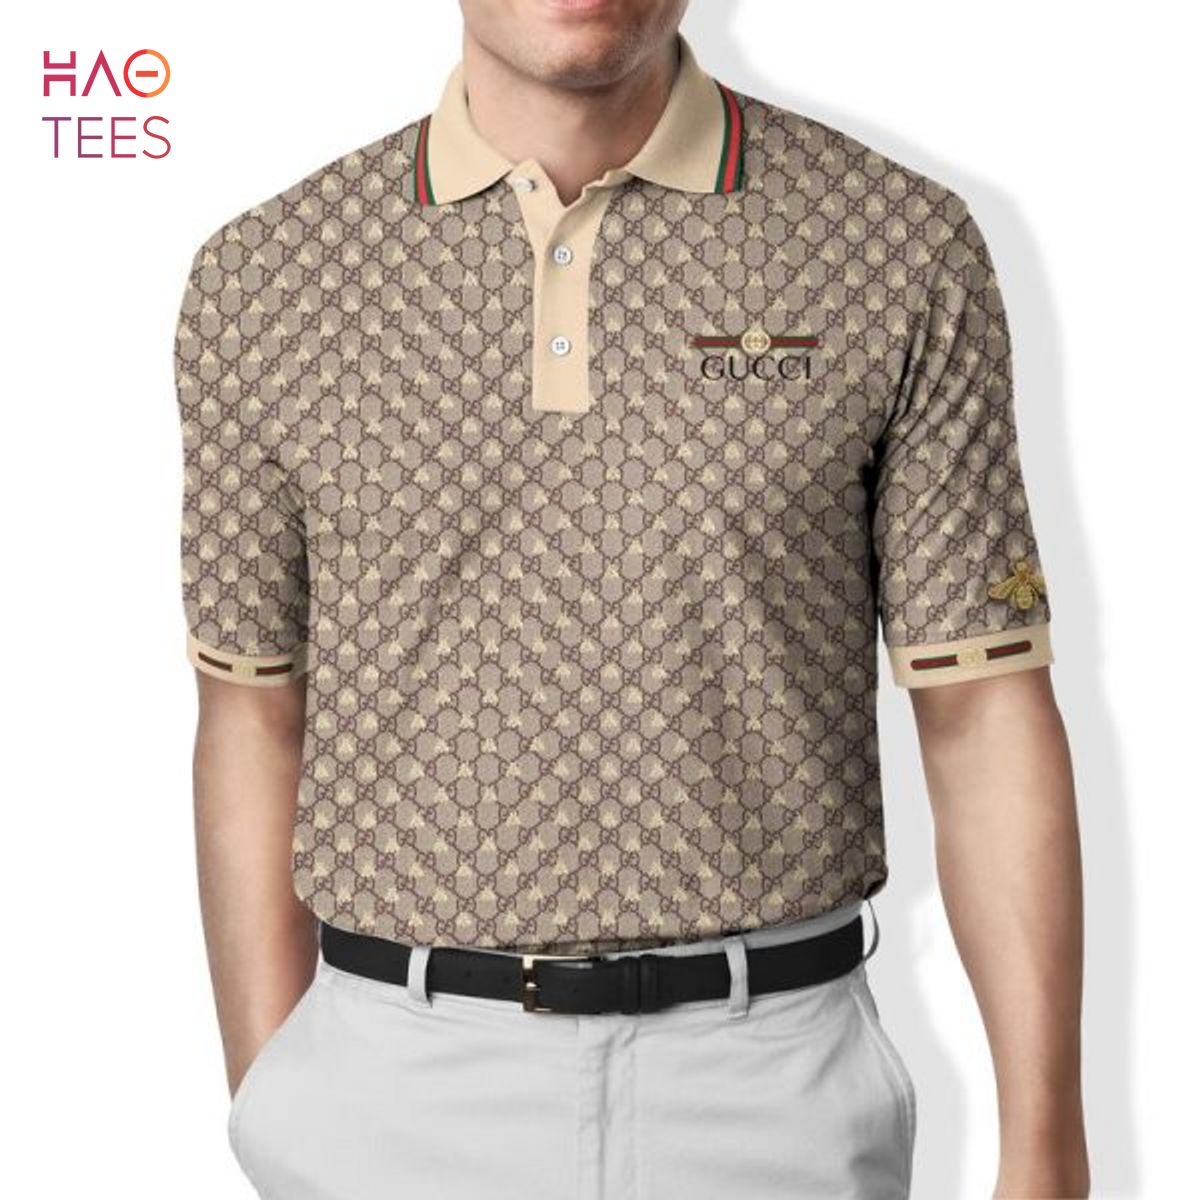 Gucci Bee Luxury Brand Polo Shirt